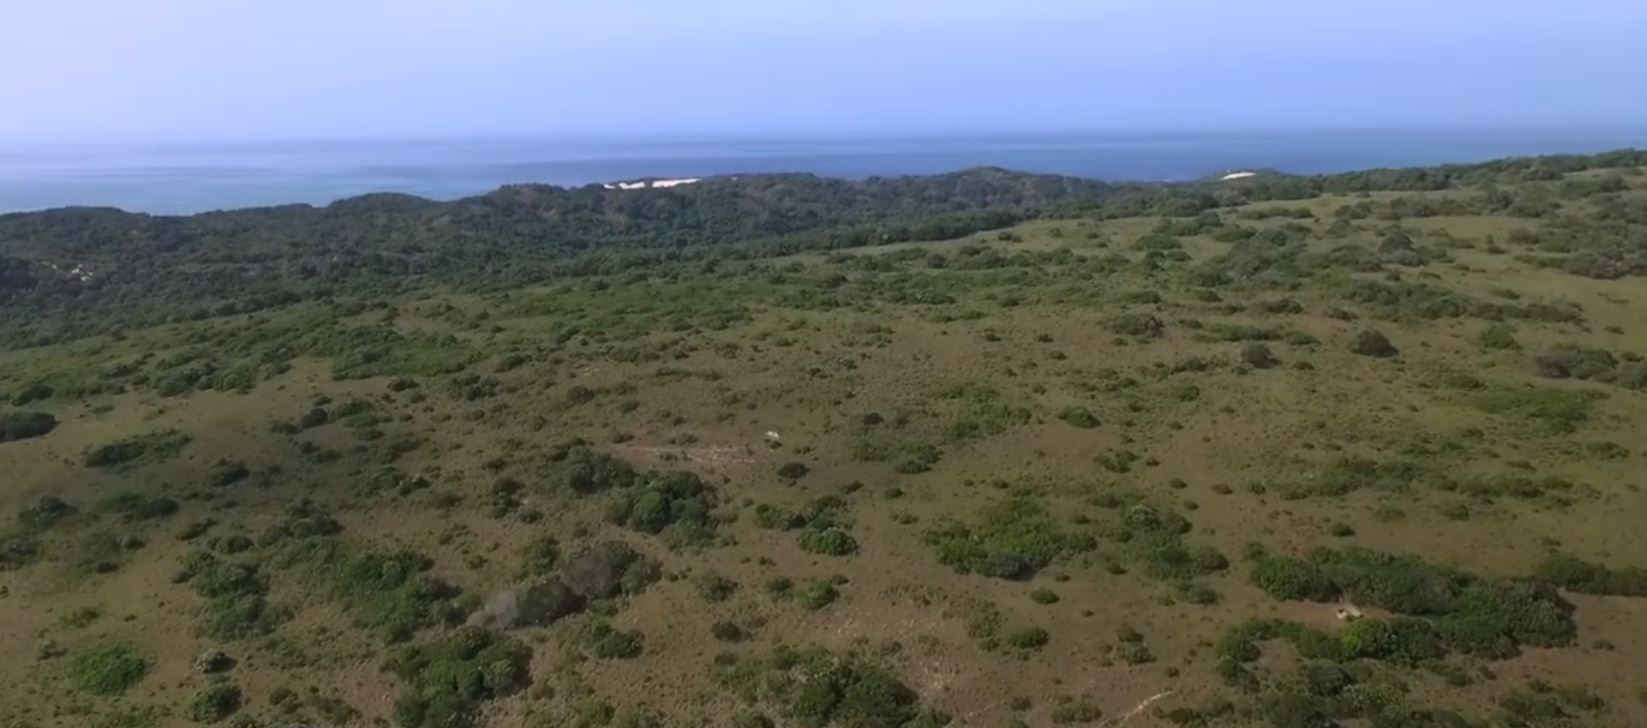 Land in Kasouga - An Eastern Cape Eco Farm nestled on the Indian Ocean